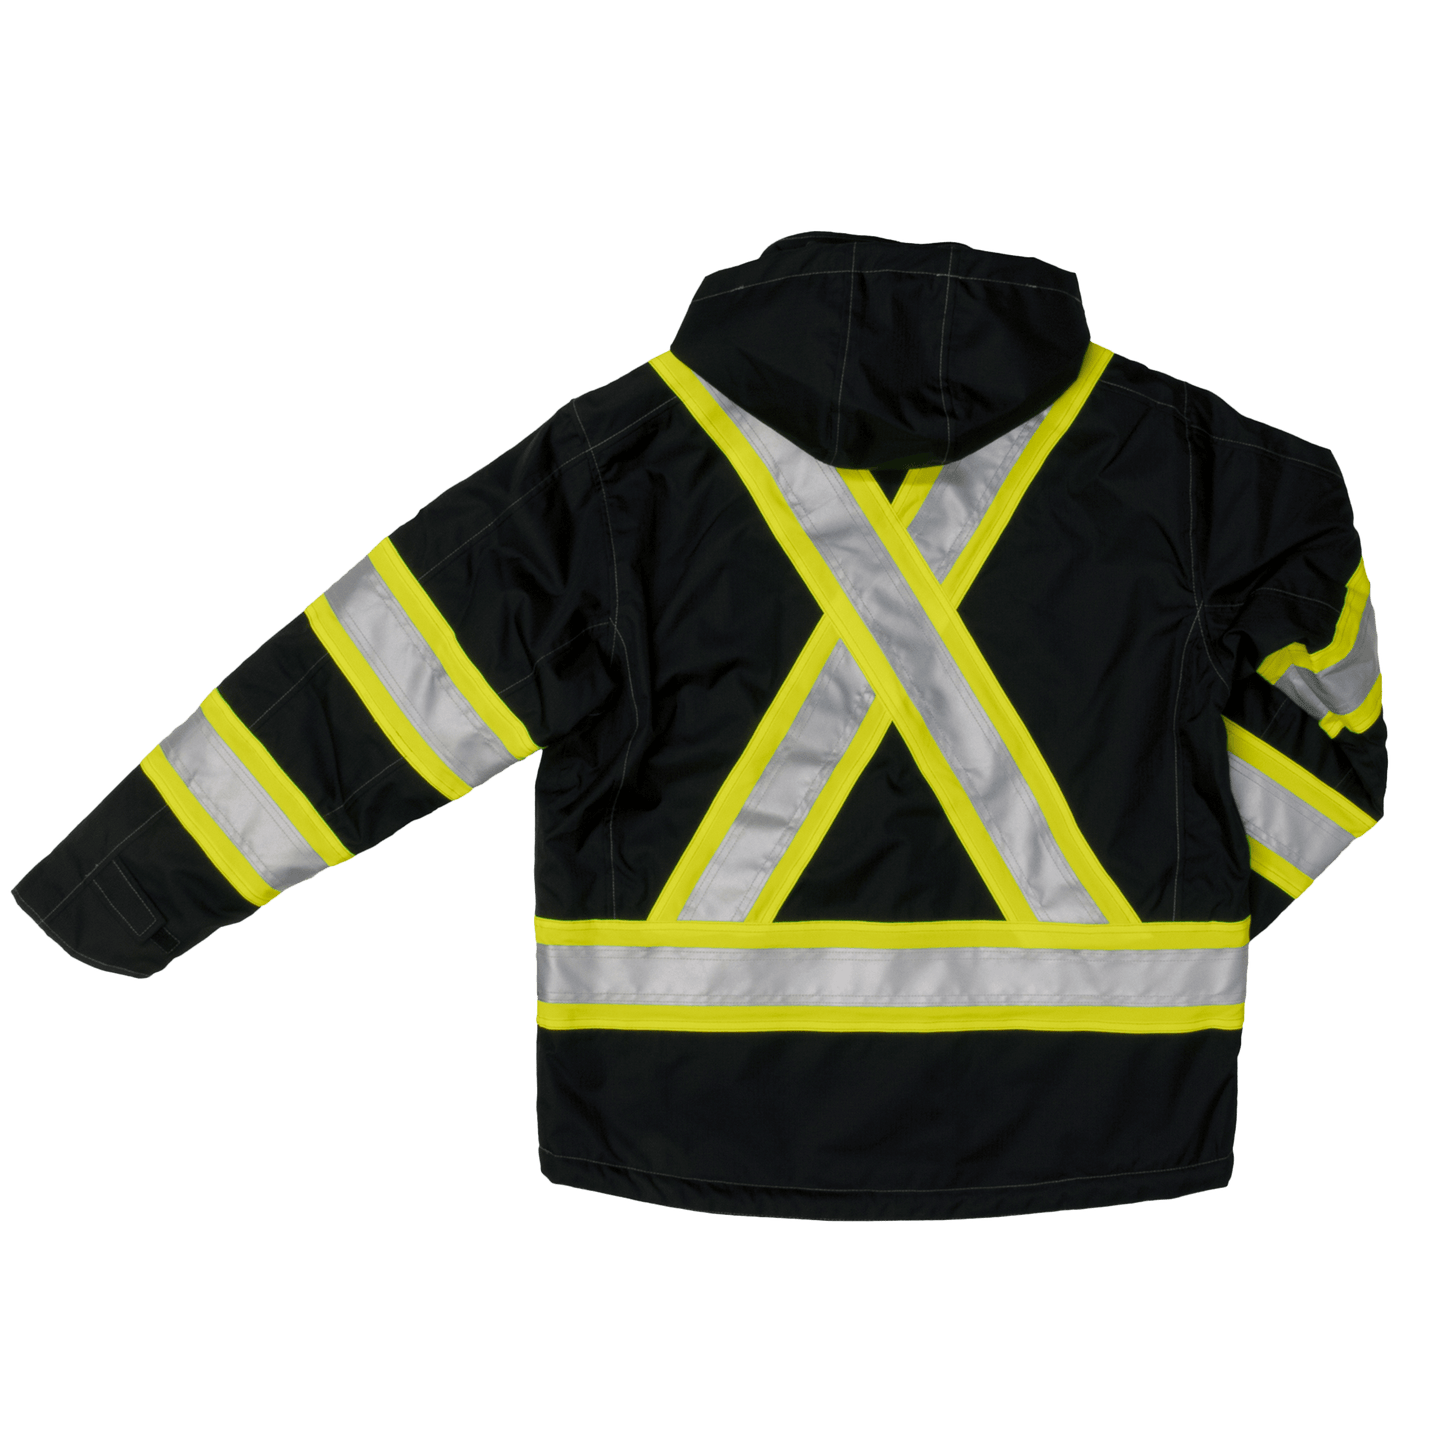 Tough Duck Fleece Lined Safety Jacket - S245 - Black - back